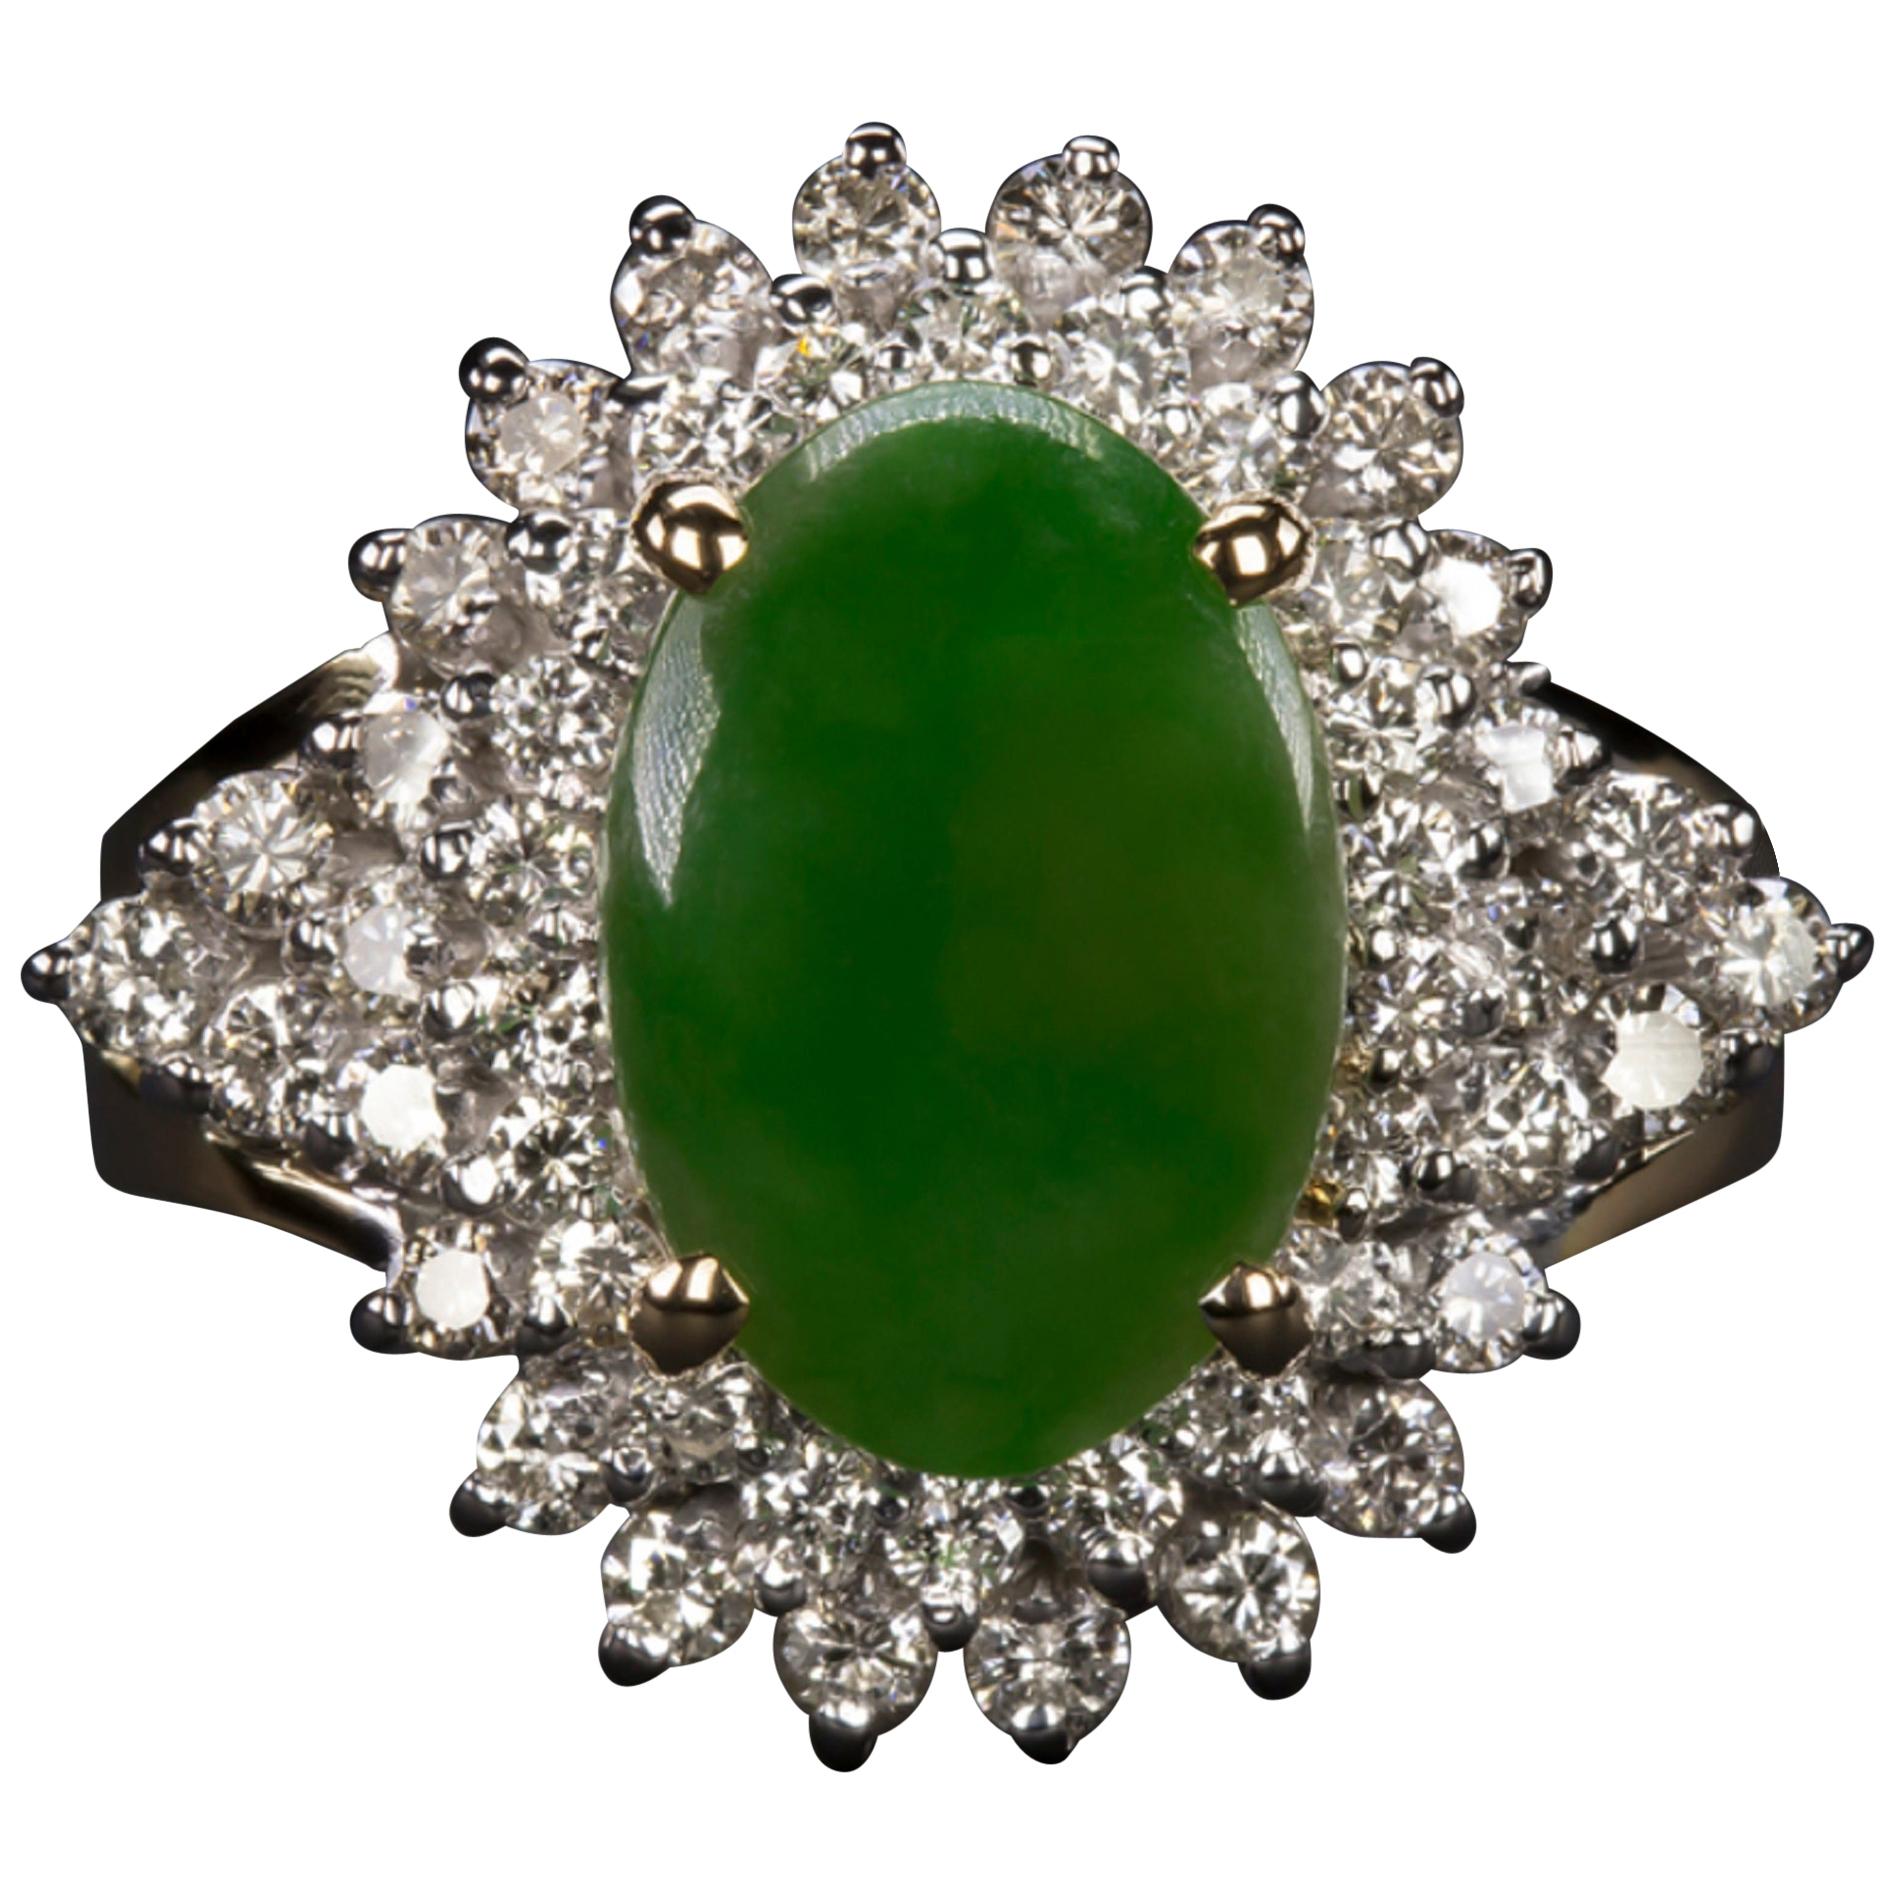 1 Carat Jade Diamond Cocktail Ring